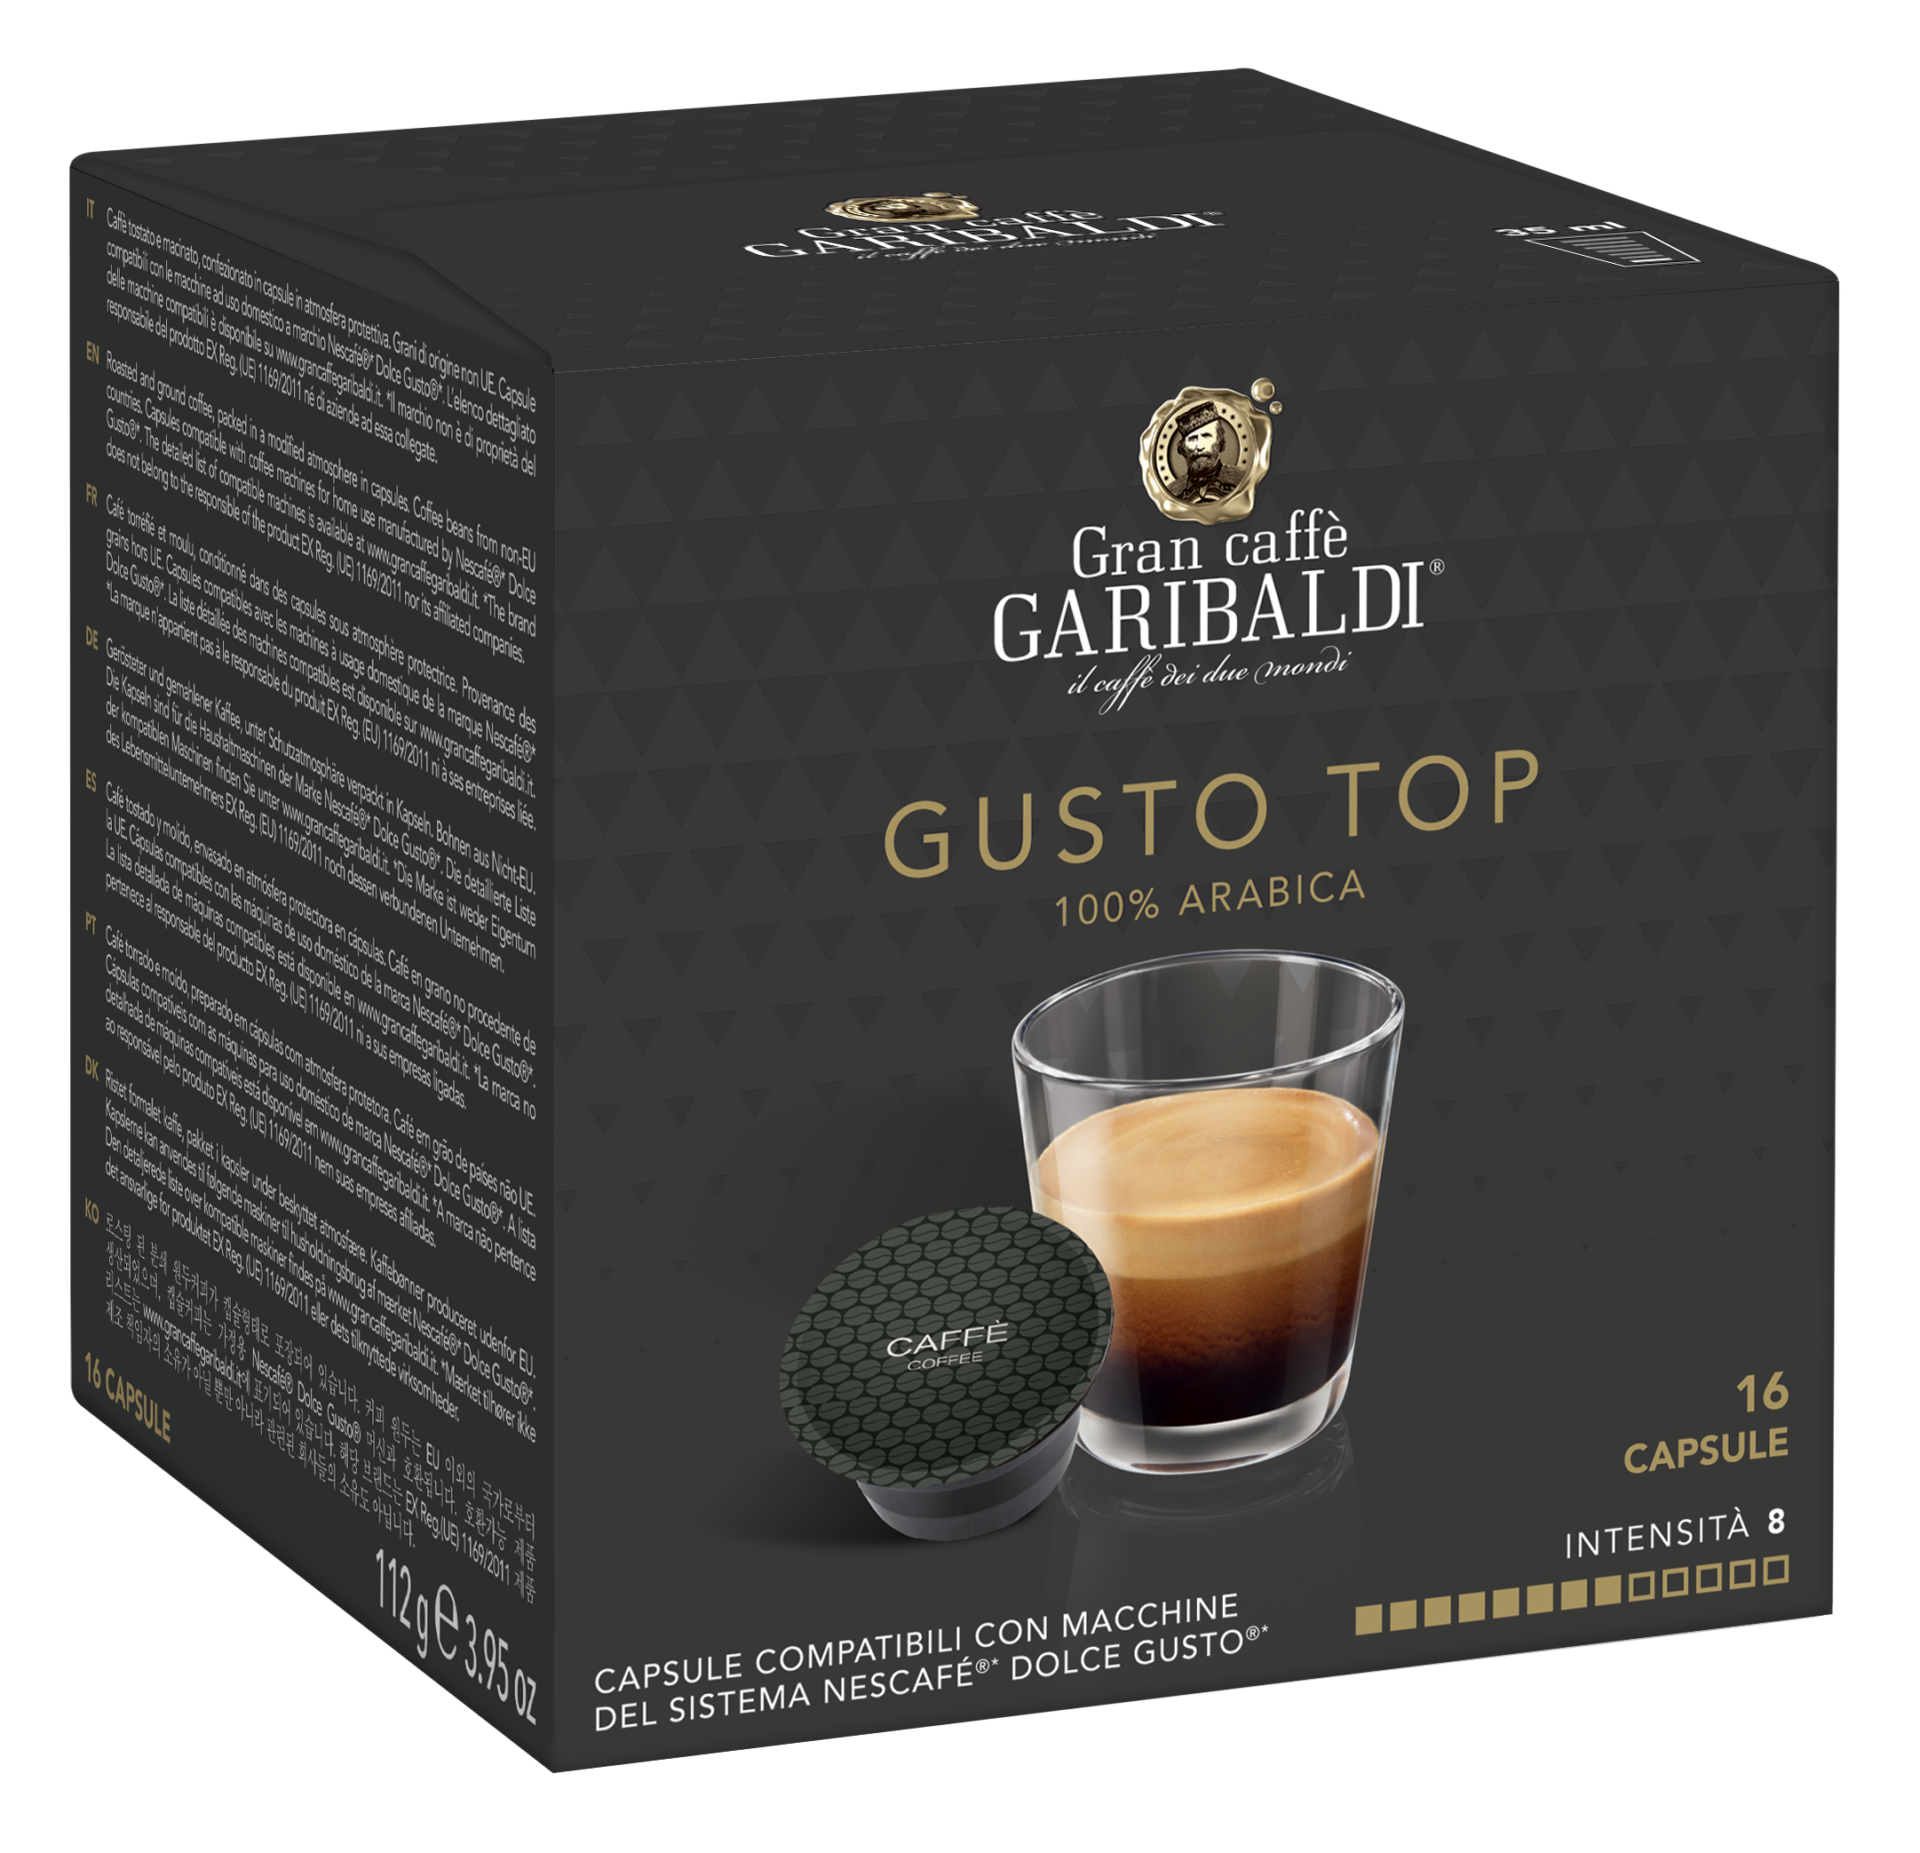 DOLCE GUSTO coffee capsule set PREMIUM, 48 pcs. - Garibaldi